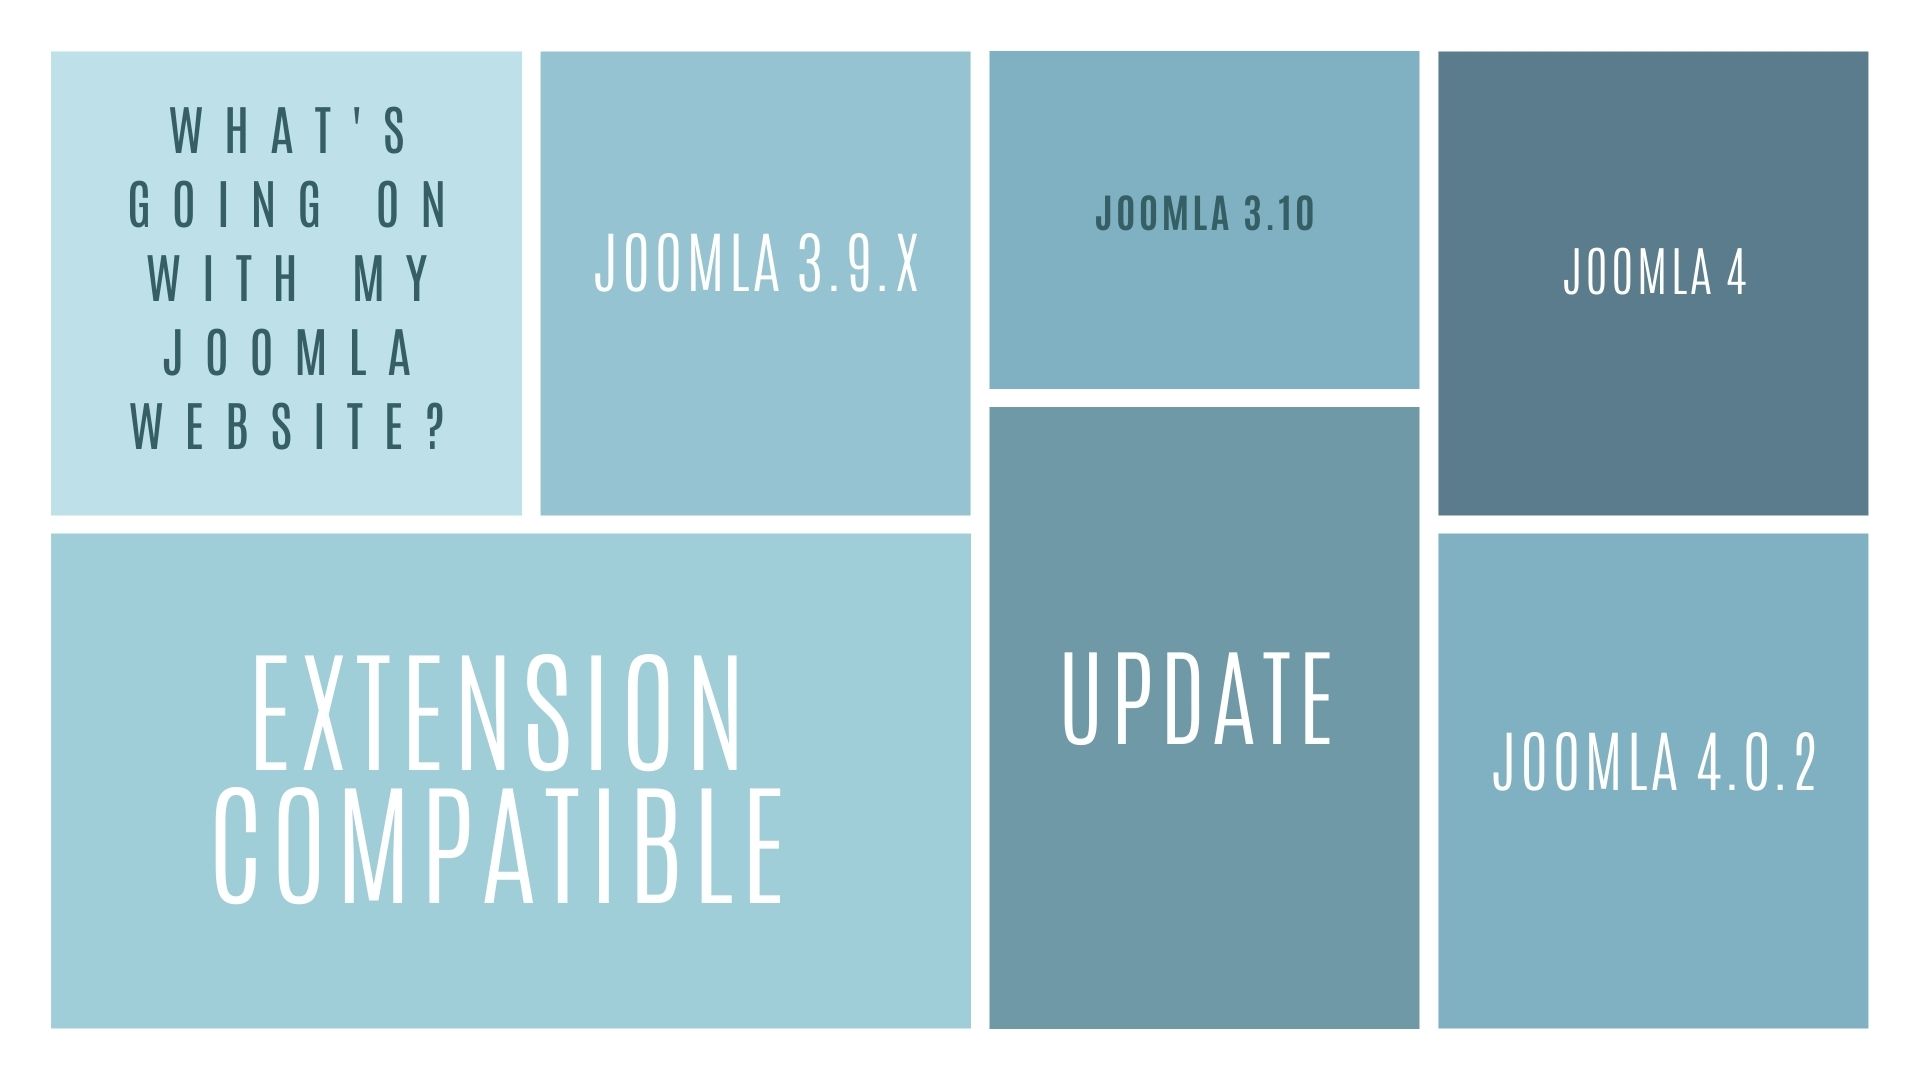 Joomla 3.10.x and Joomla 4 release, what's going on with your Joomla websites?